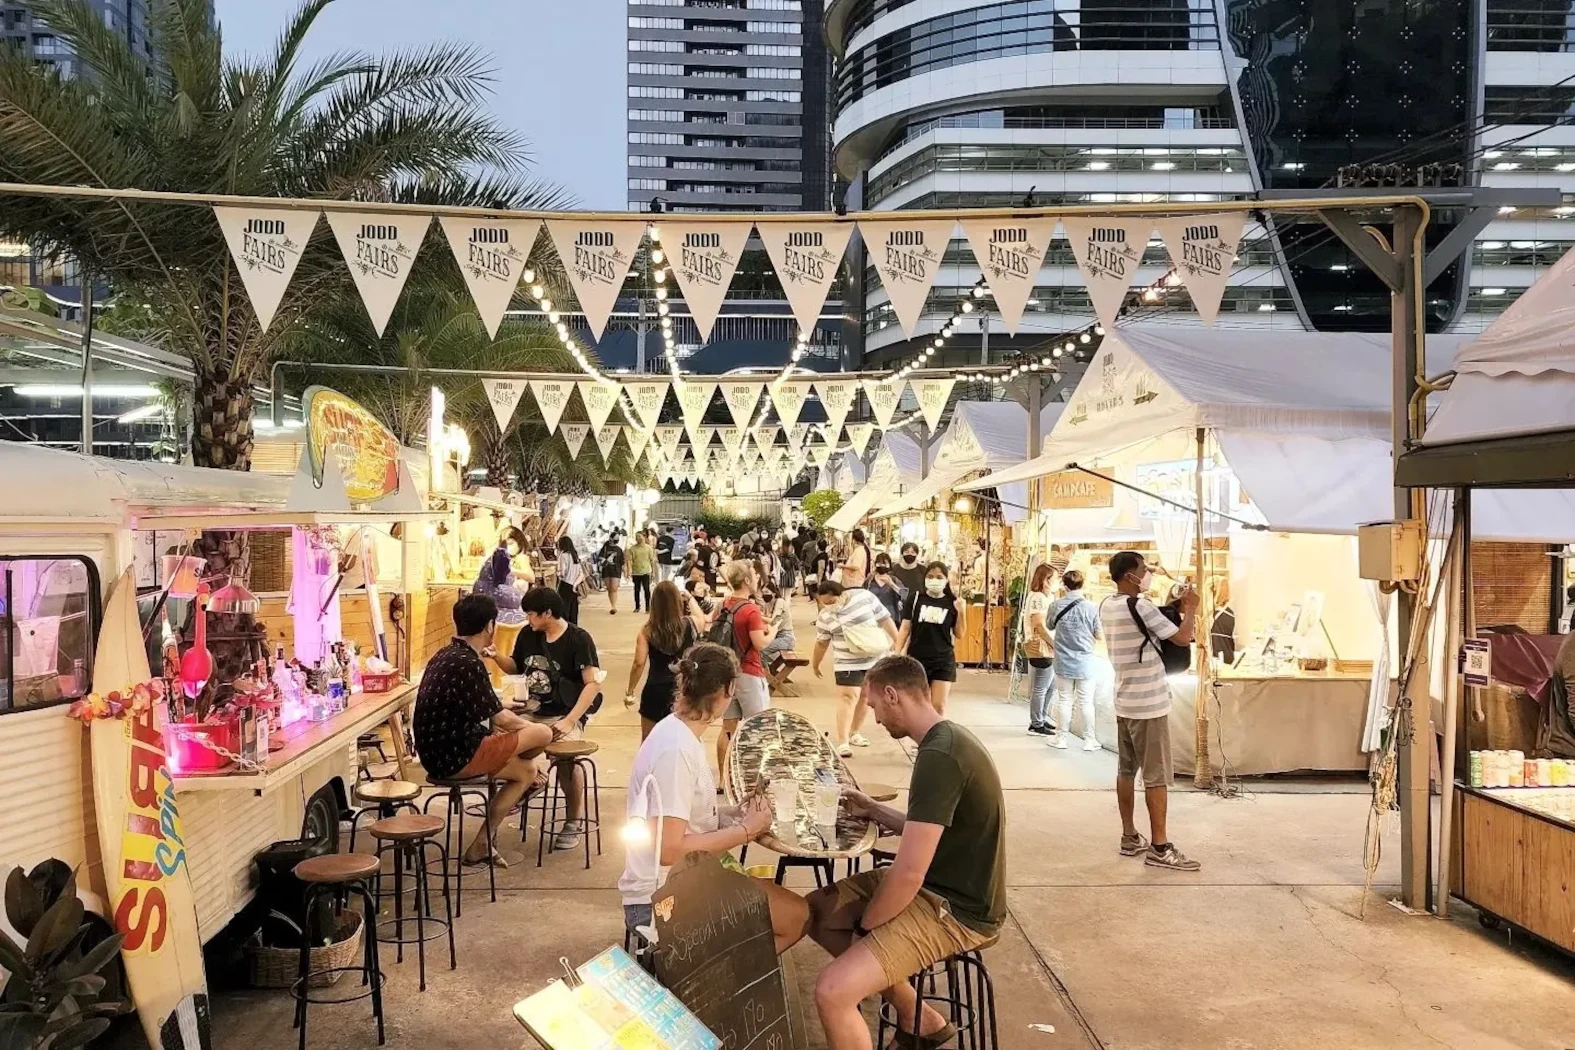 the beautiful night market of Jodd Fairs in Bangkok with people dating